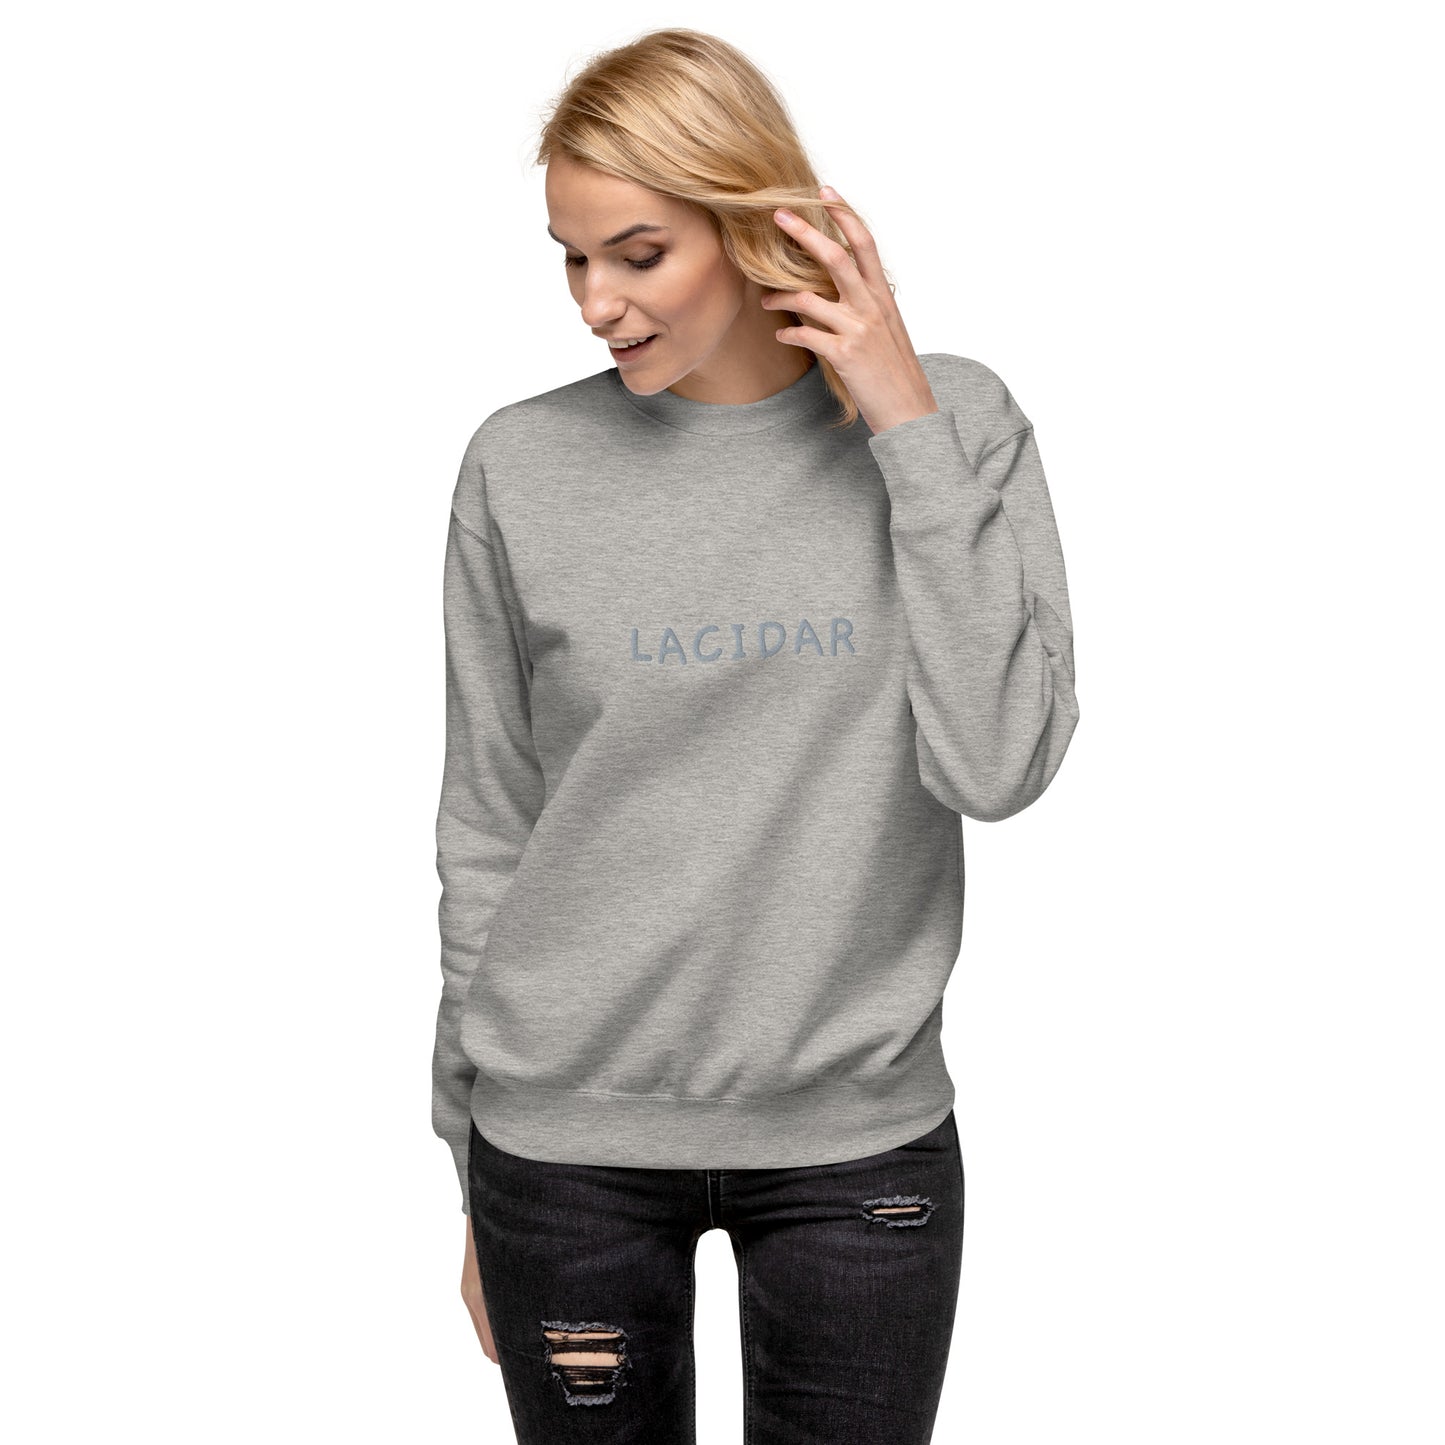 Lacidar whitework embroidered Unisex Premium Sweatshirt